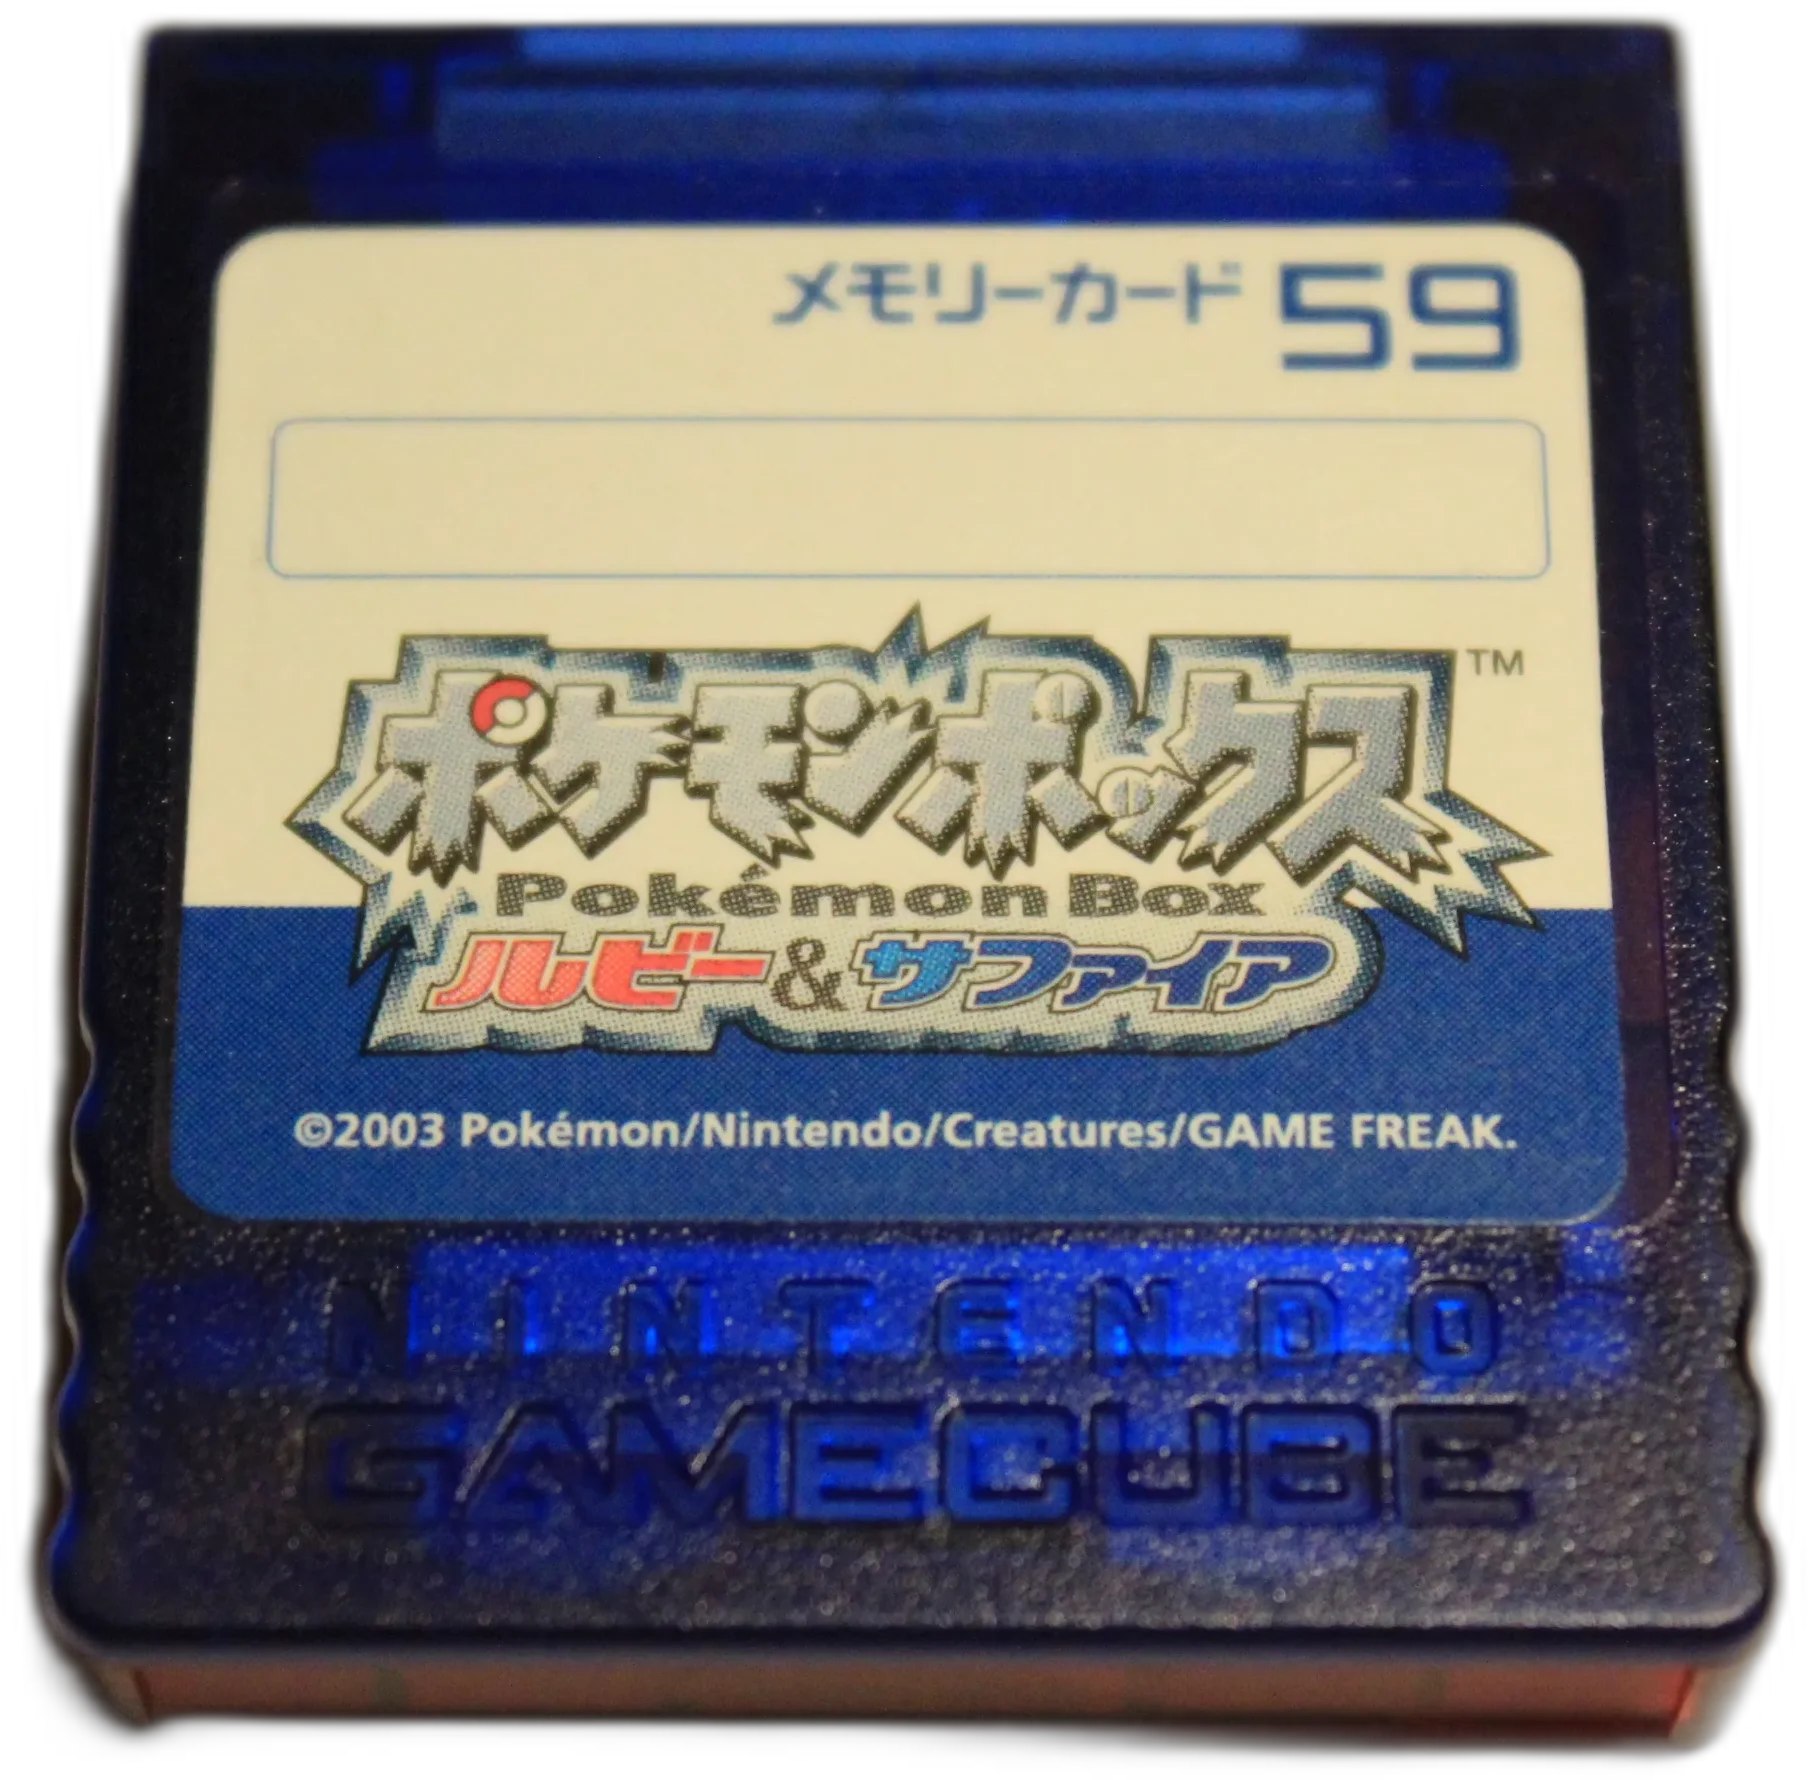  Nintendo GameCube Pokémon Ruby and Sapphire Memory Card